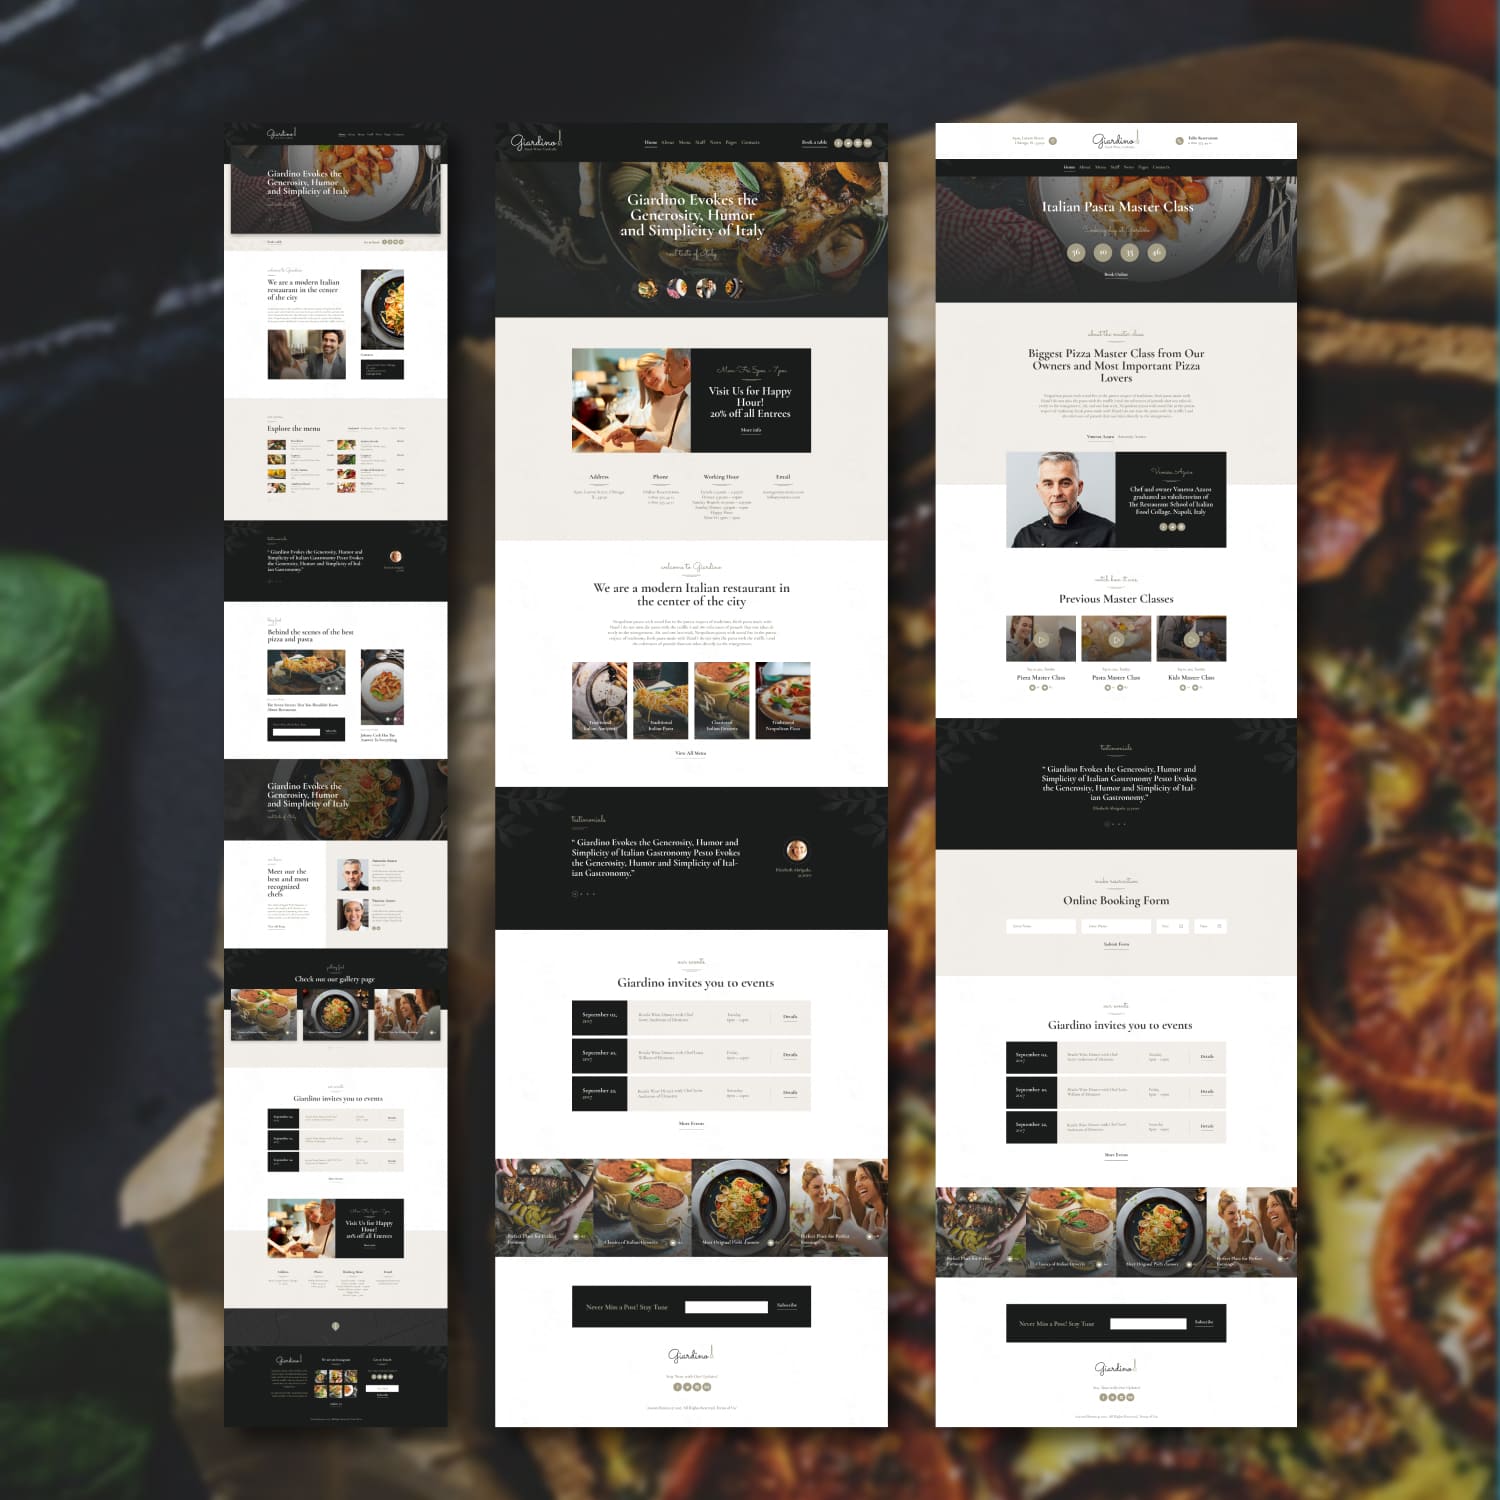 Giardino | An Italian Restaurant & Cafe WordPress Theme cover.